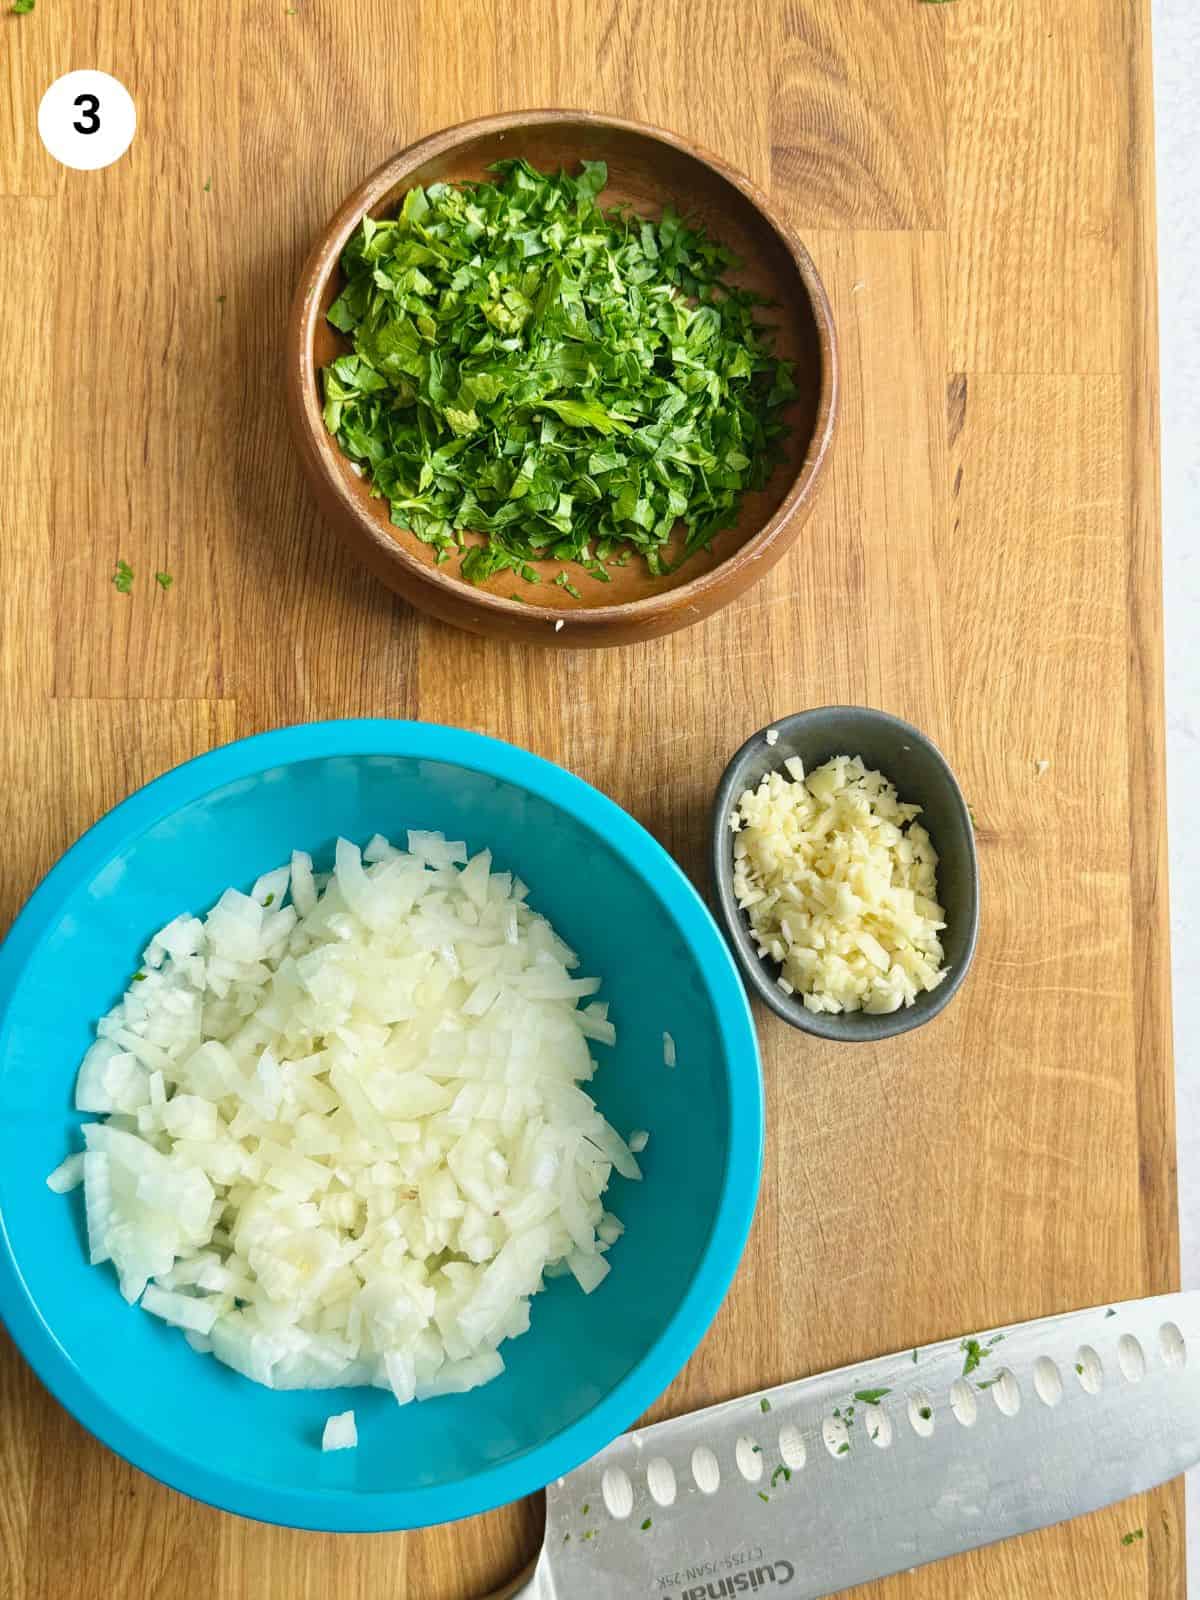 Chopped onion, garlic cloves and fresh parsley in bowls.